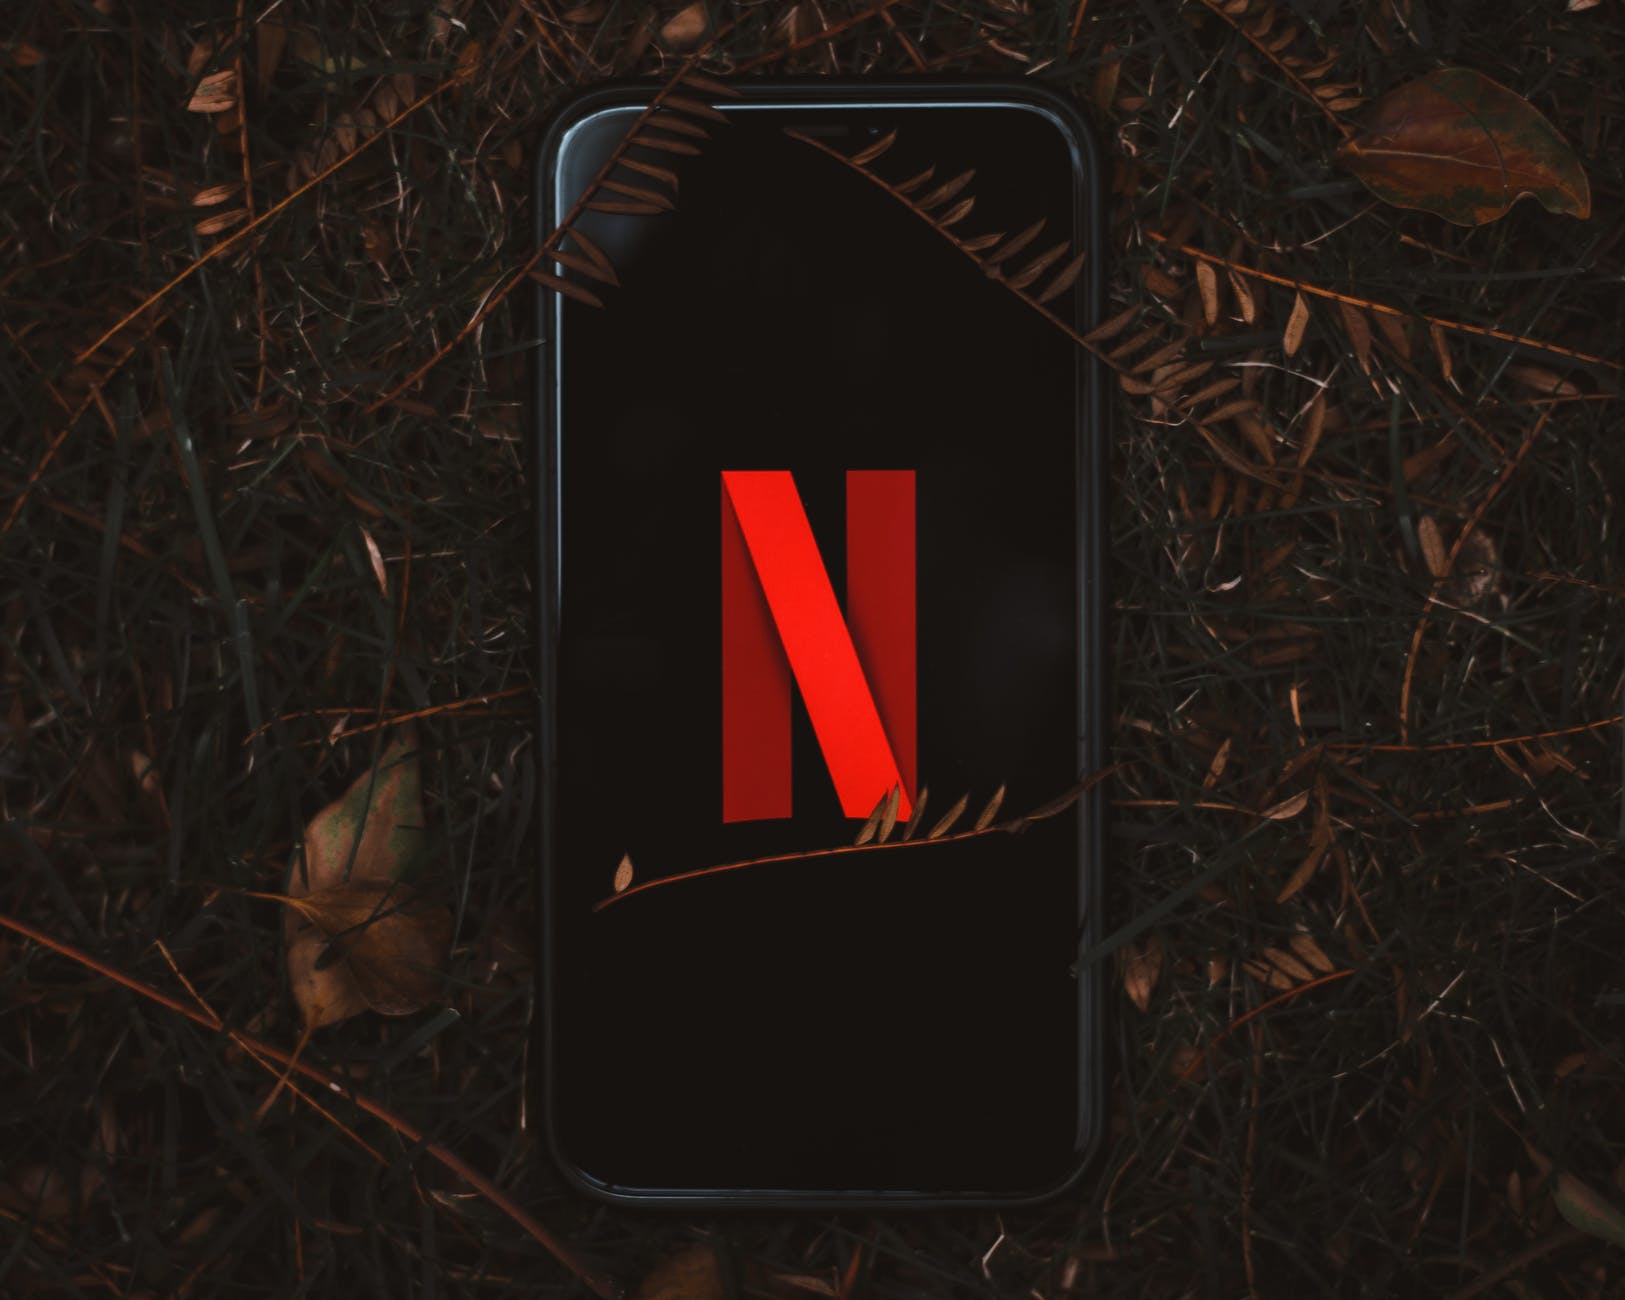 netflix logo on smartphone screen